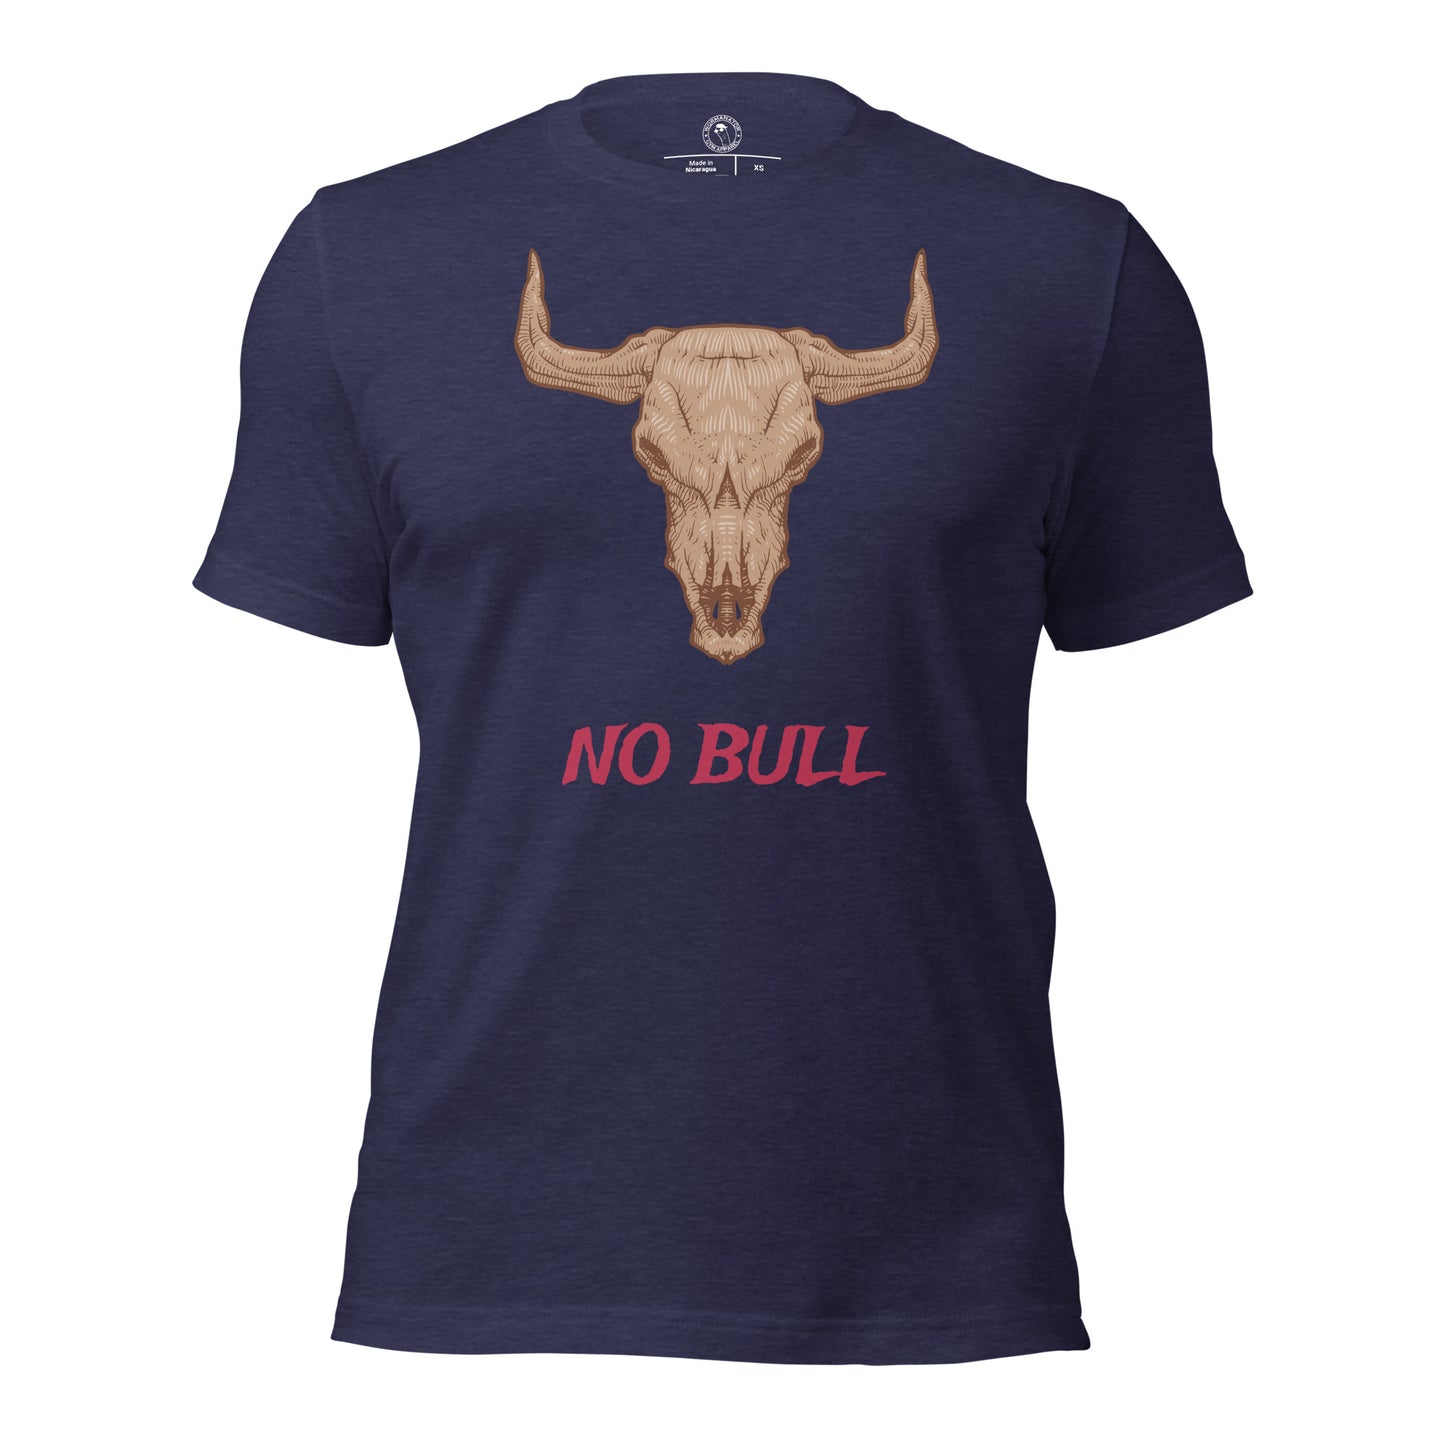 No Bull Shirt in Heather Midnight Navy